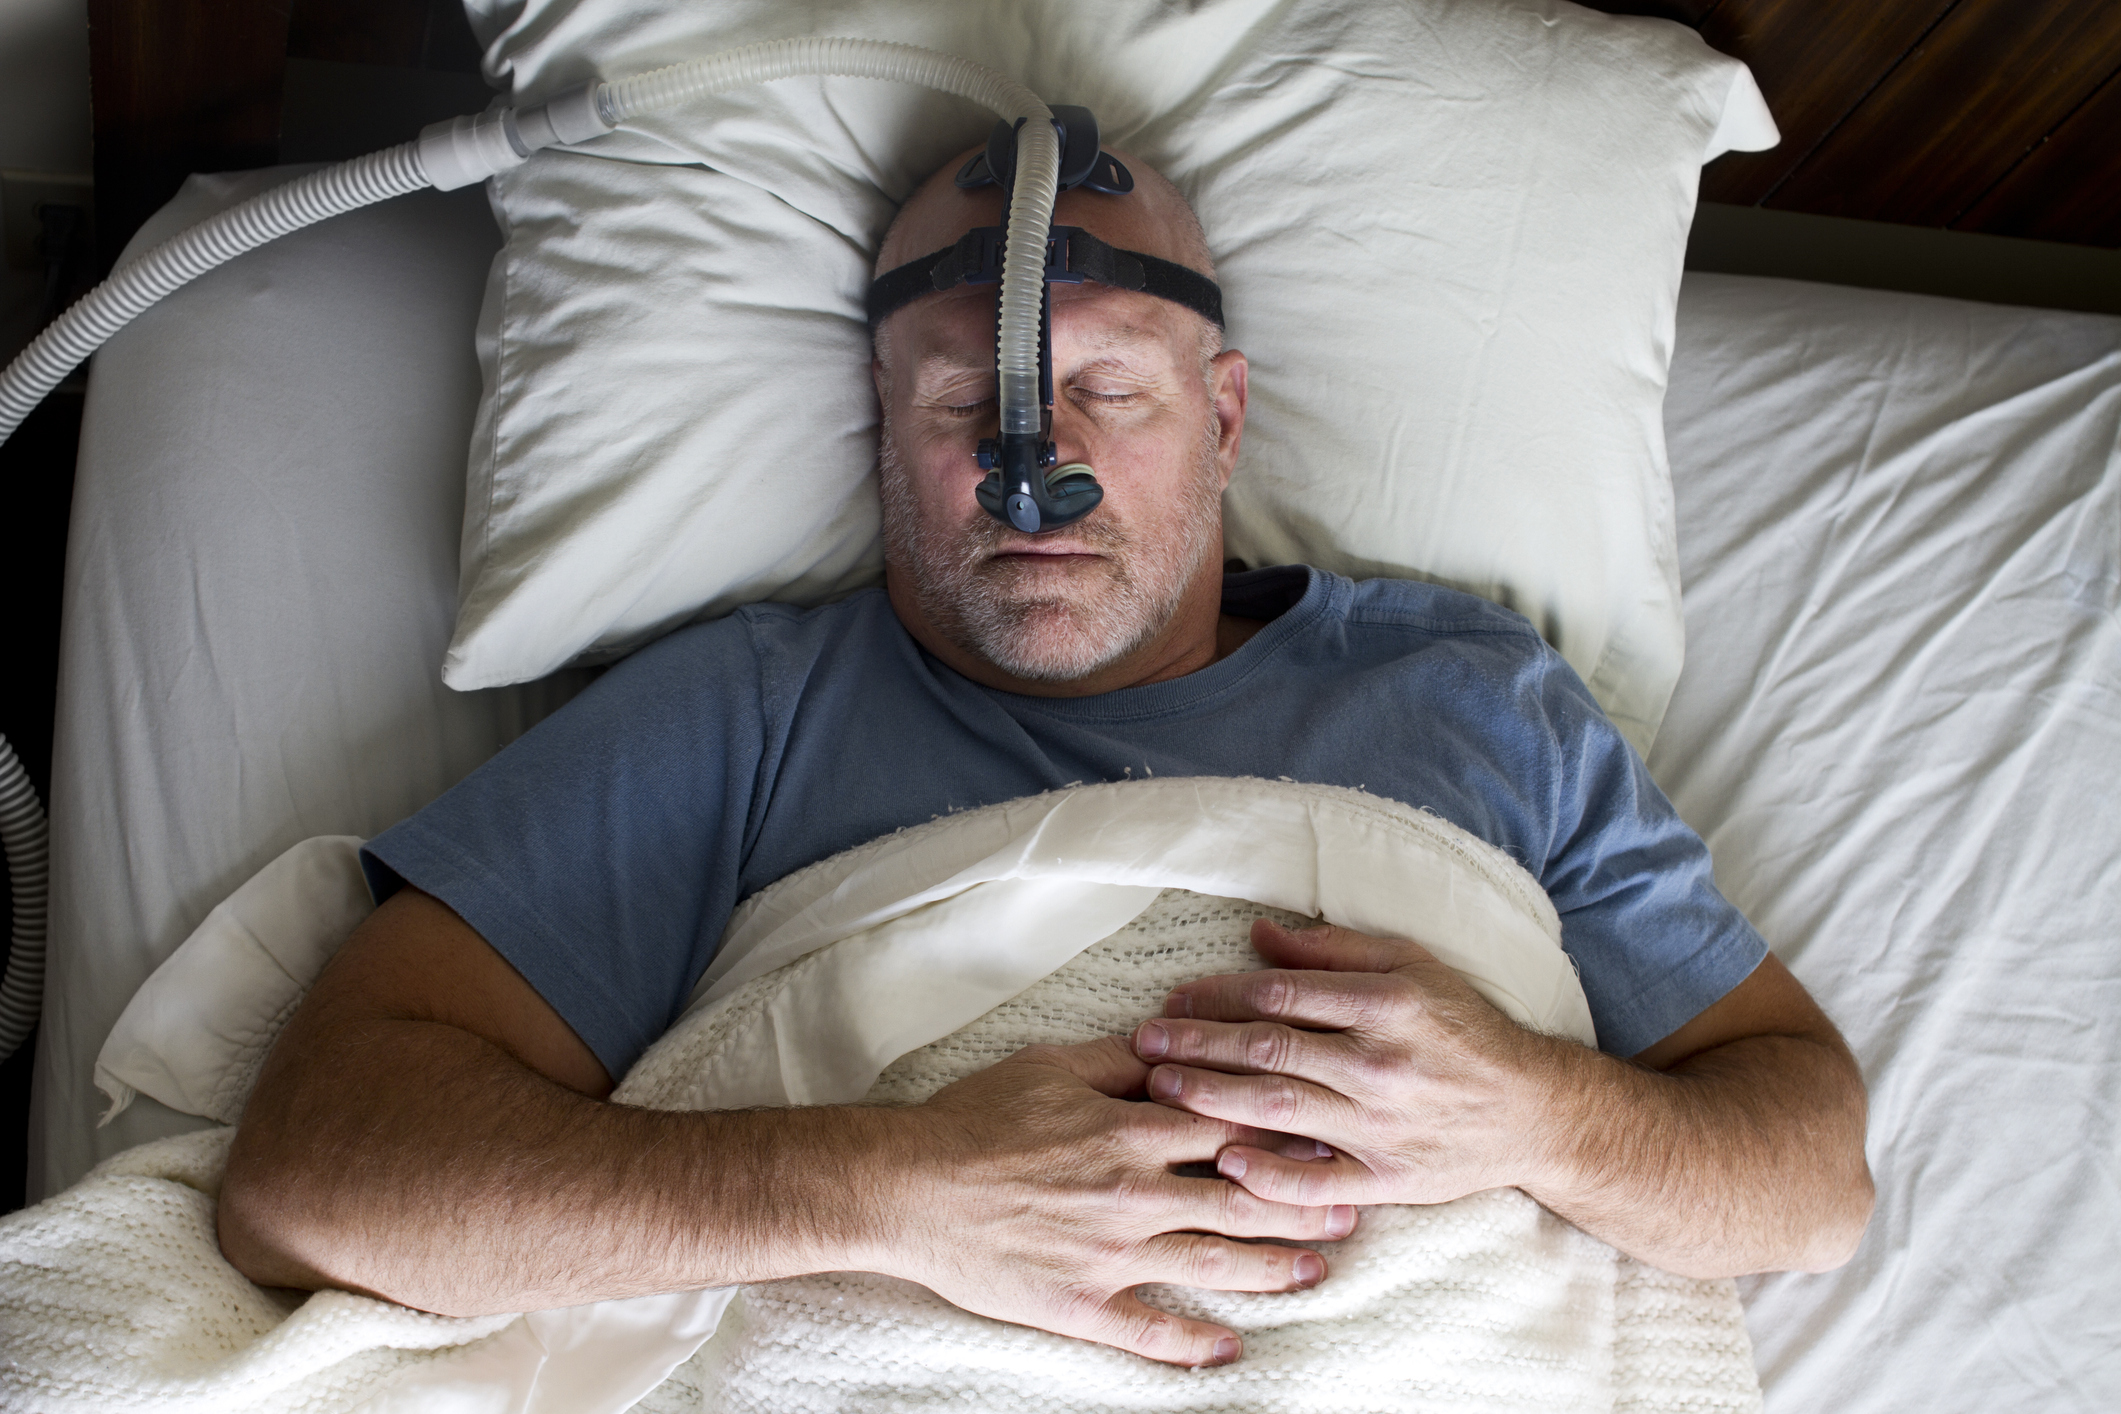 Sleep apnea has an immediate imp...